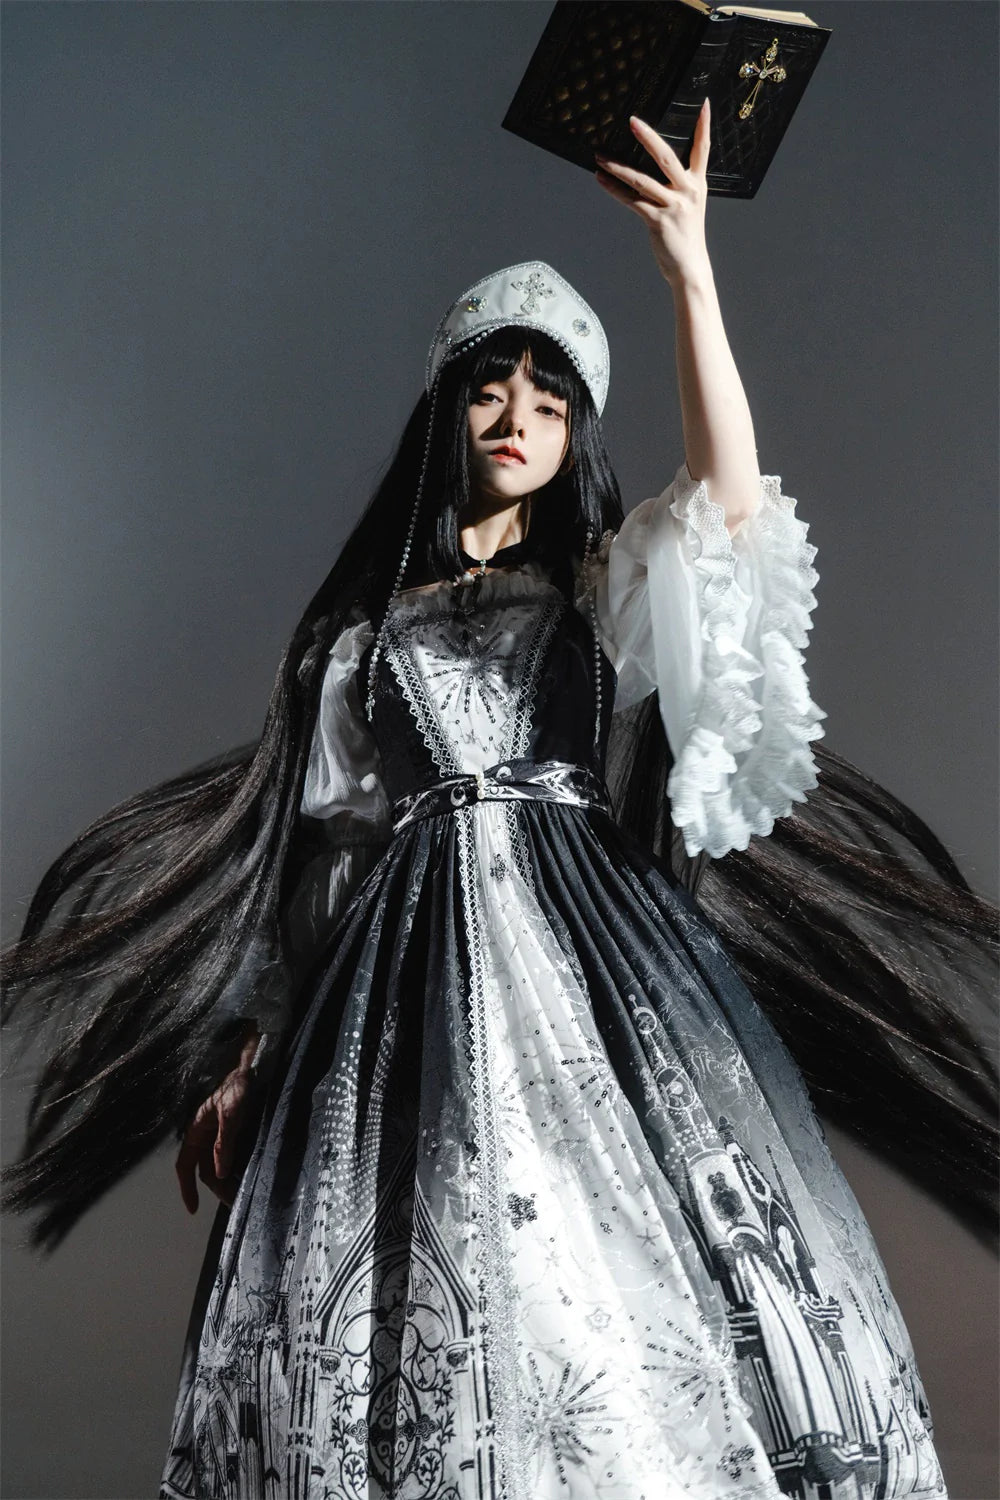 [Sale period ended] Sanctuary Goth Lolita Off Shoulder Princess Sleeve Blouse